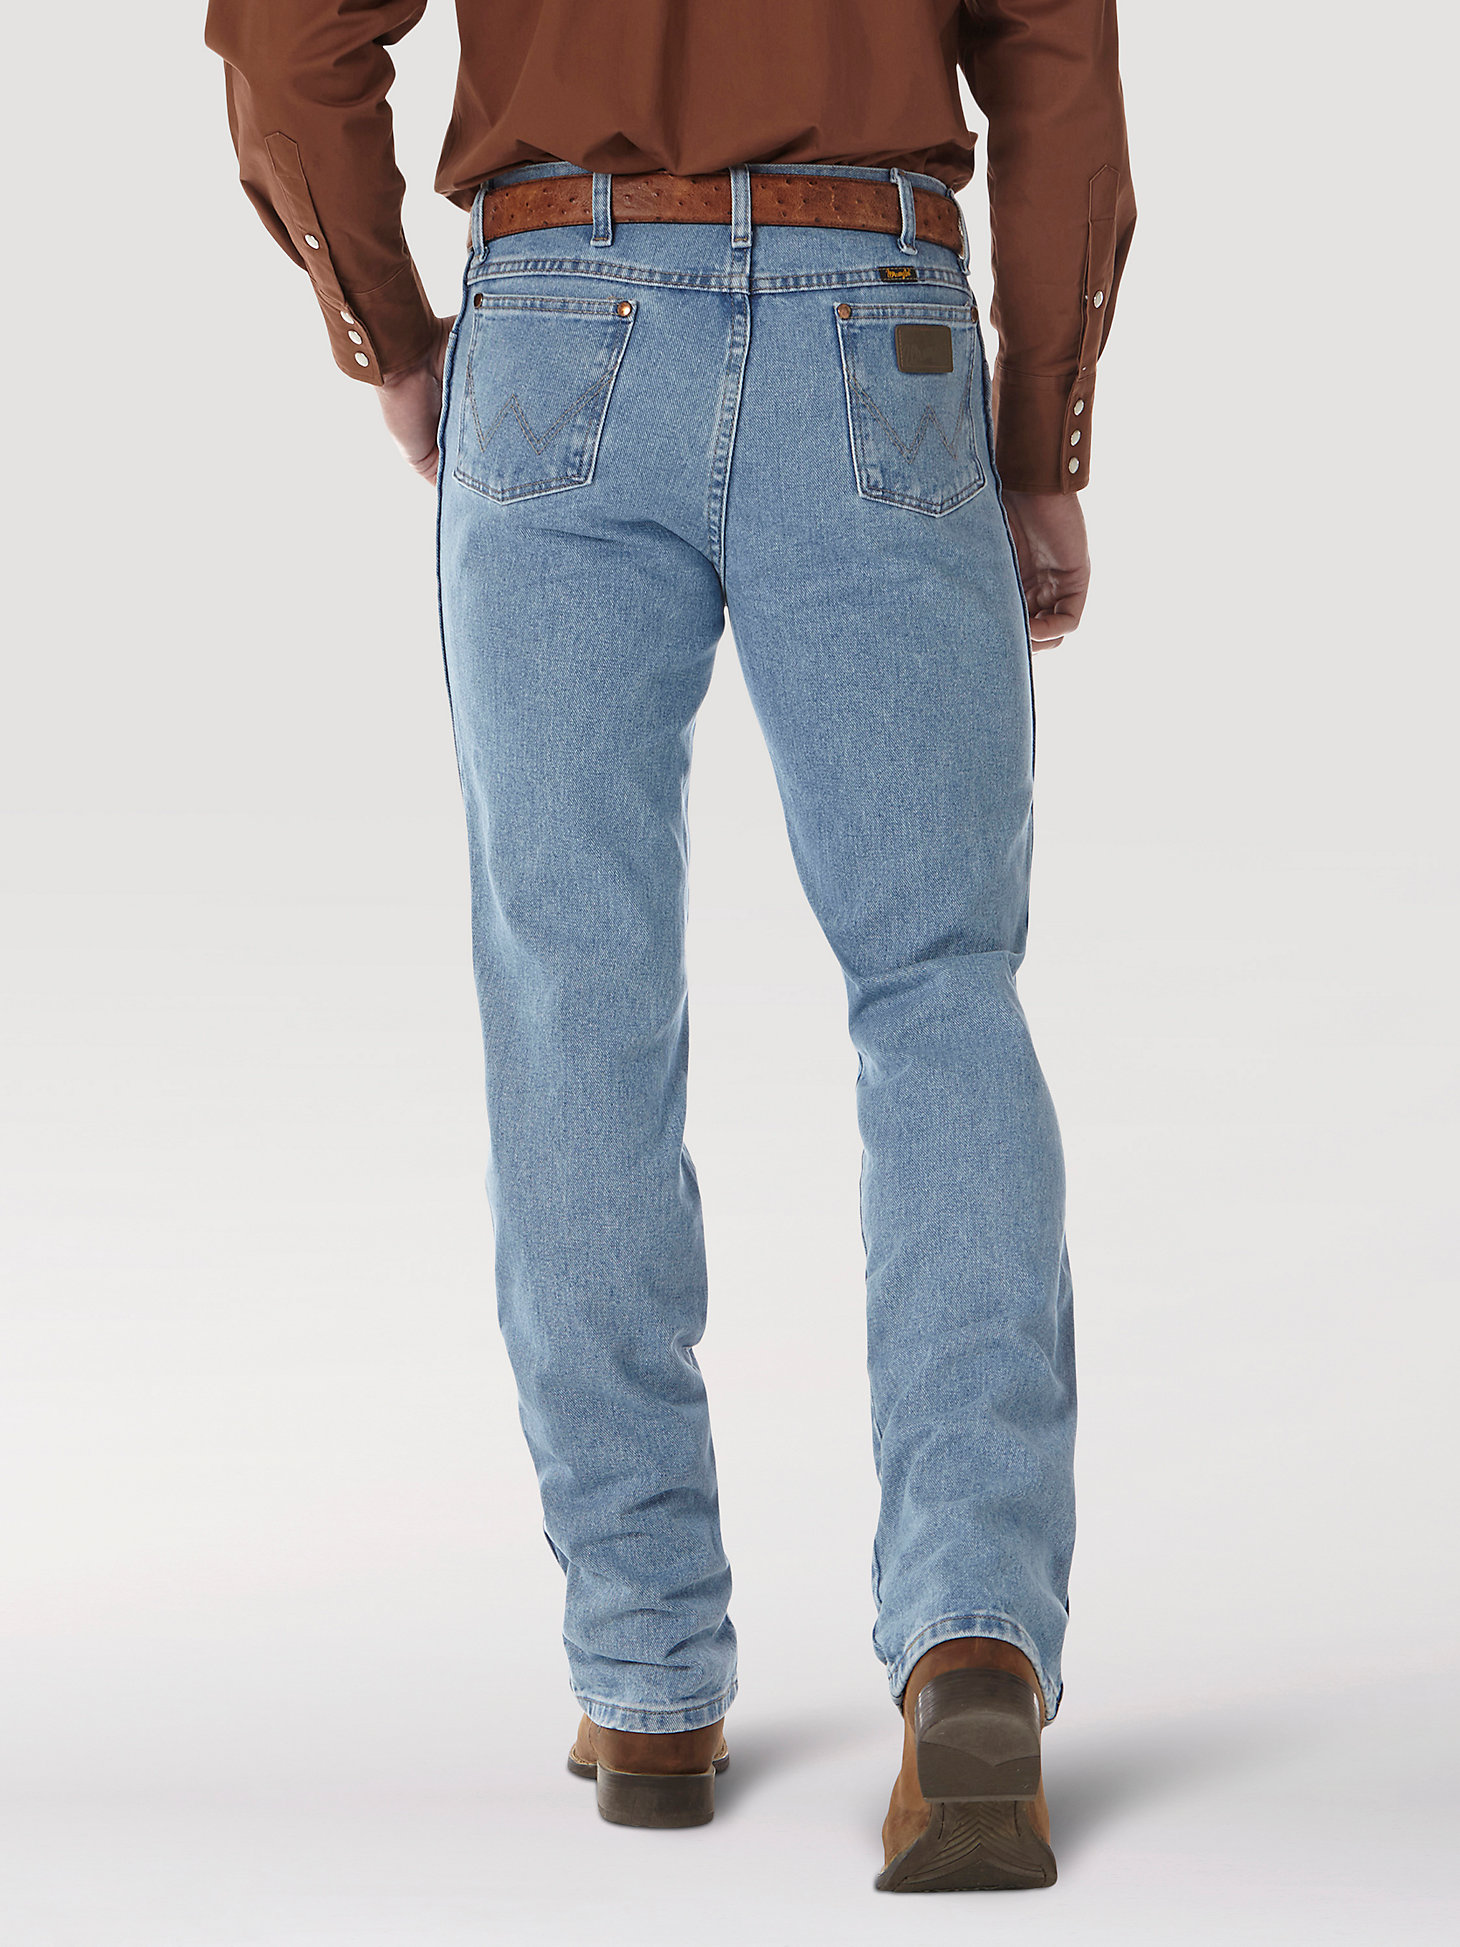 Wrangler® Cowboy Cut® Slim Fit Jean in Antique Wash alternative view 1